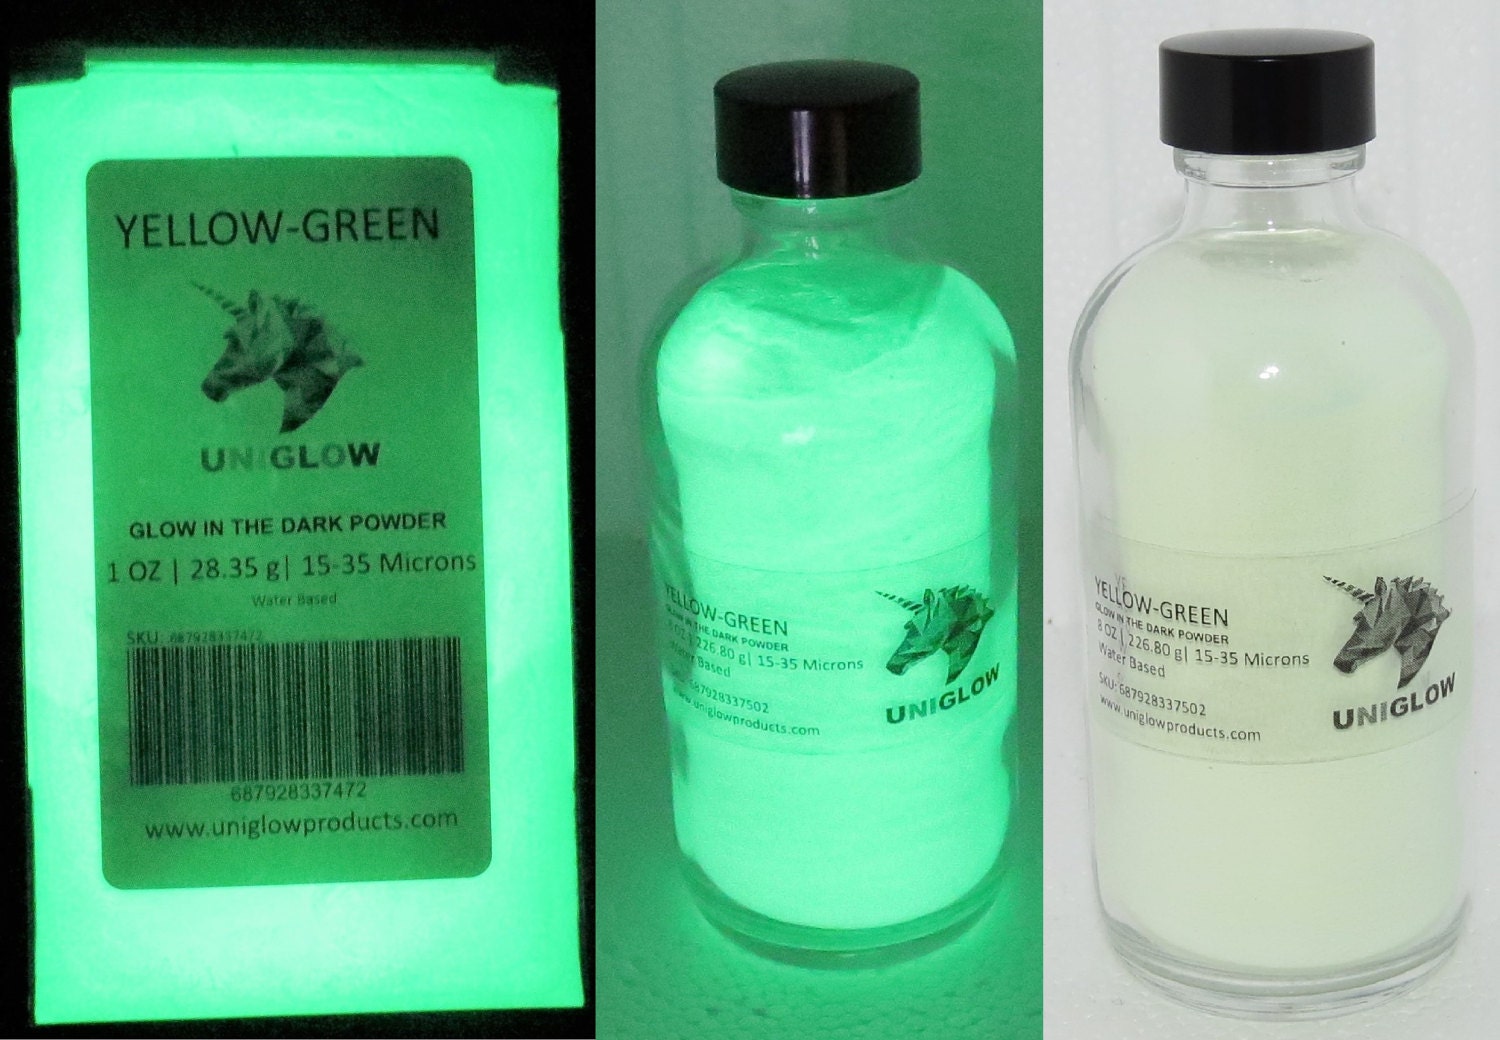 Premium Glow in the Dark Powder by UNIGLOW PRODUCTS LLC